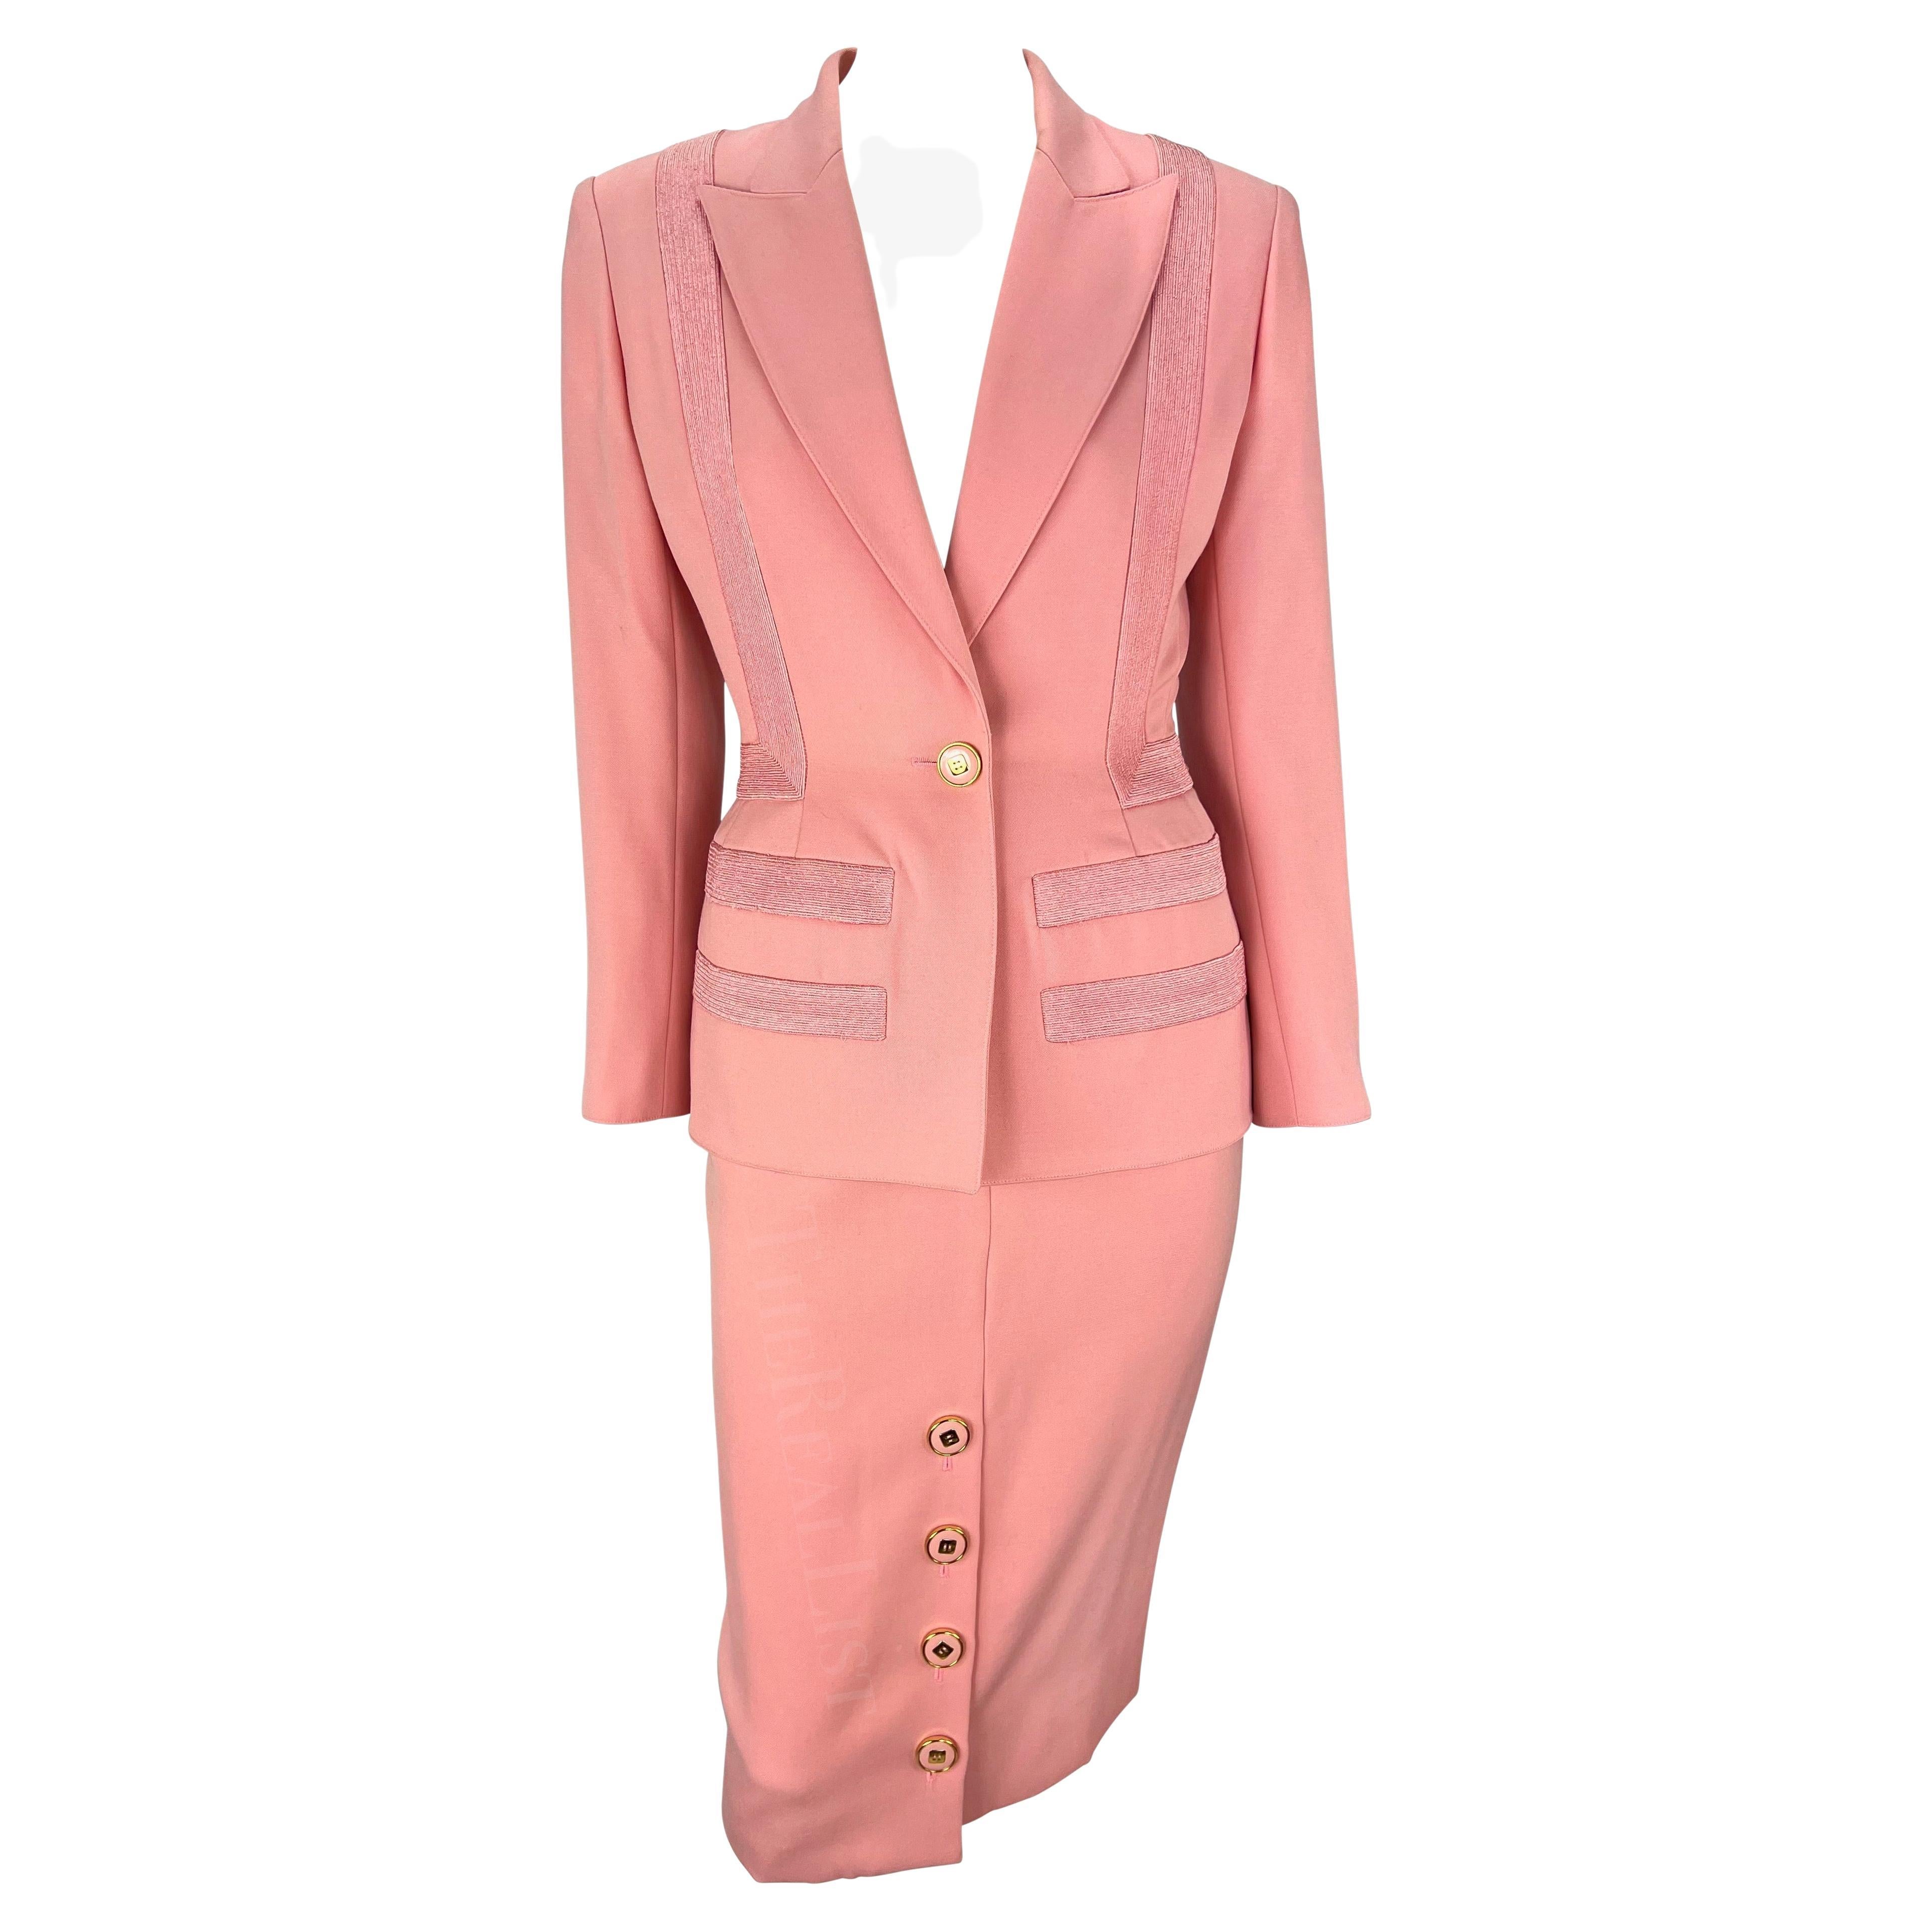 S/S 1993 Valentino Garavani Runway Embroidered Geometric Light Pink Skirt Suit For Sale